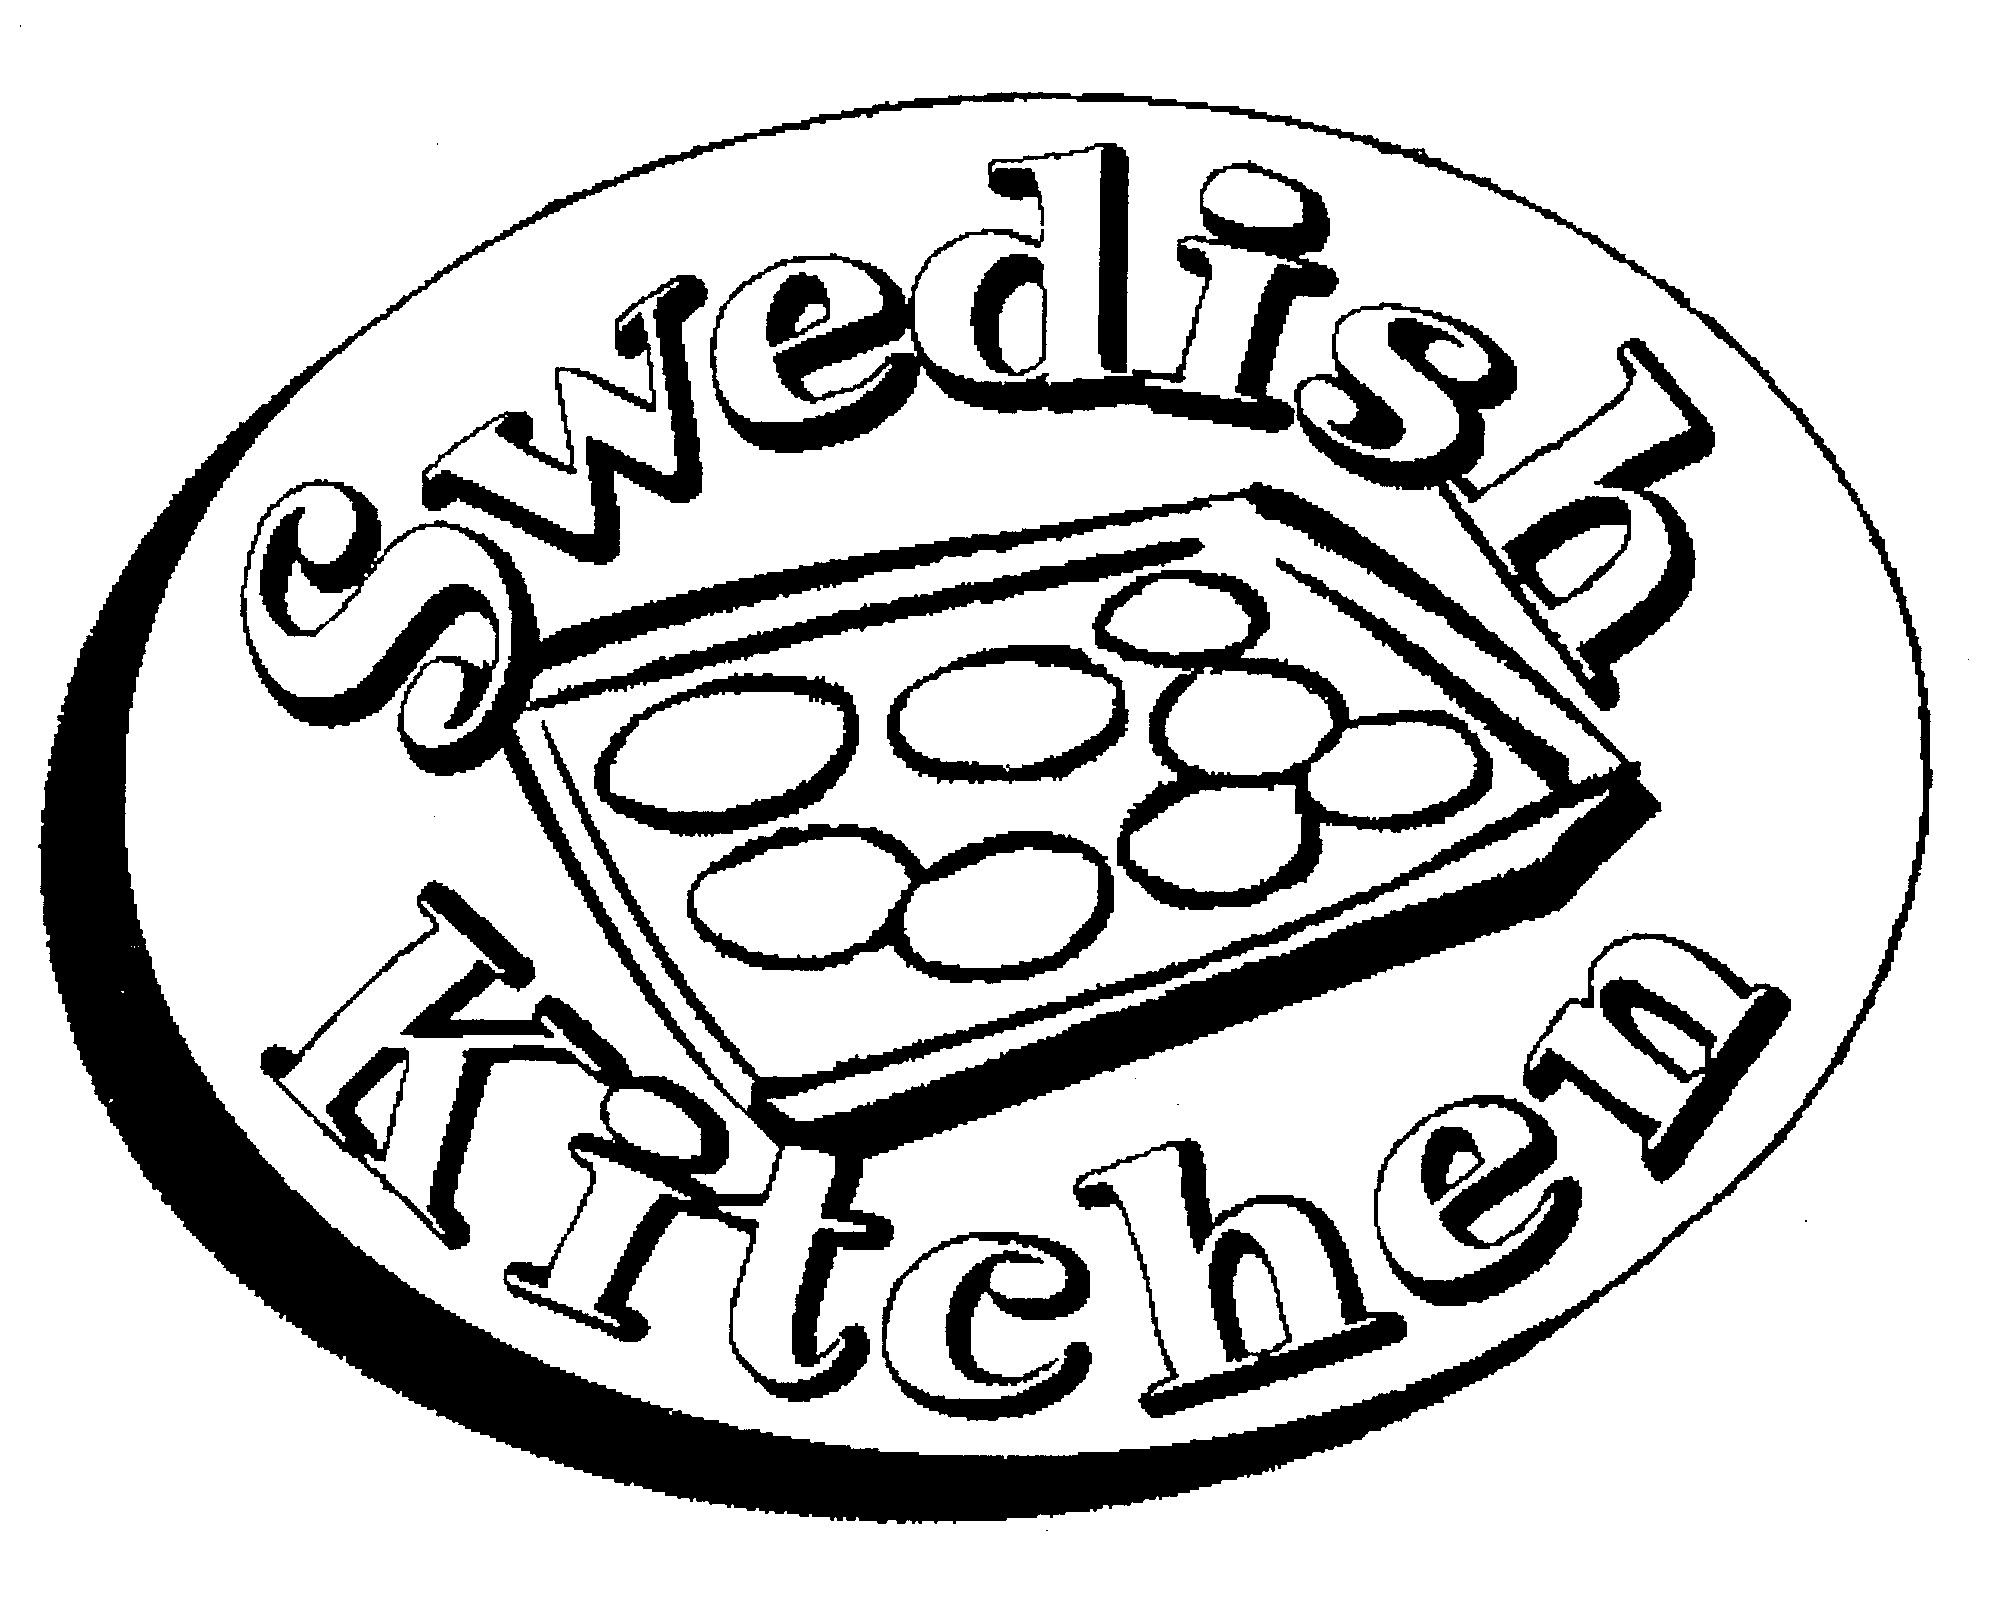  SWEDISH KITCHEN